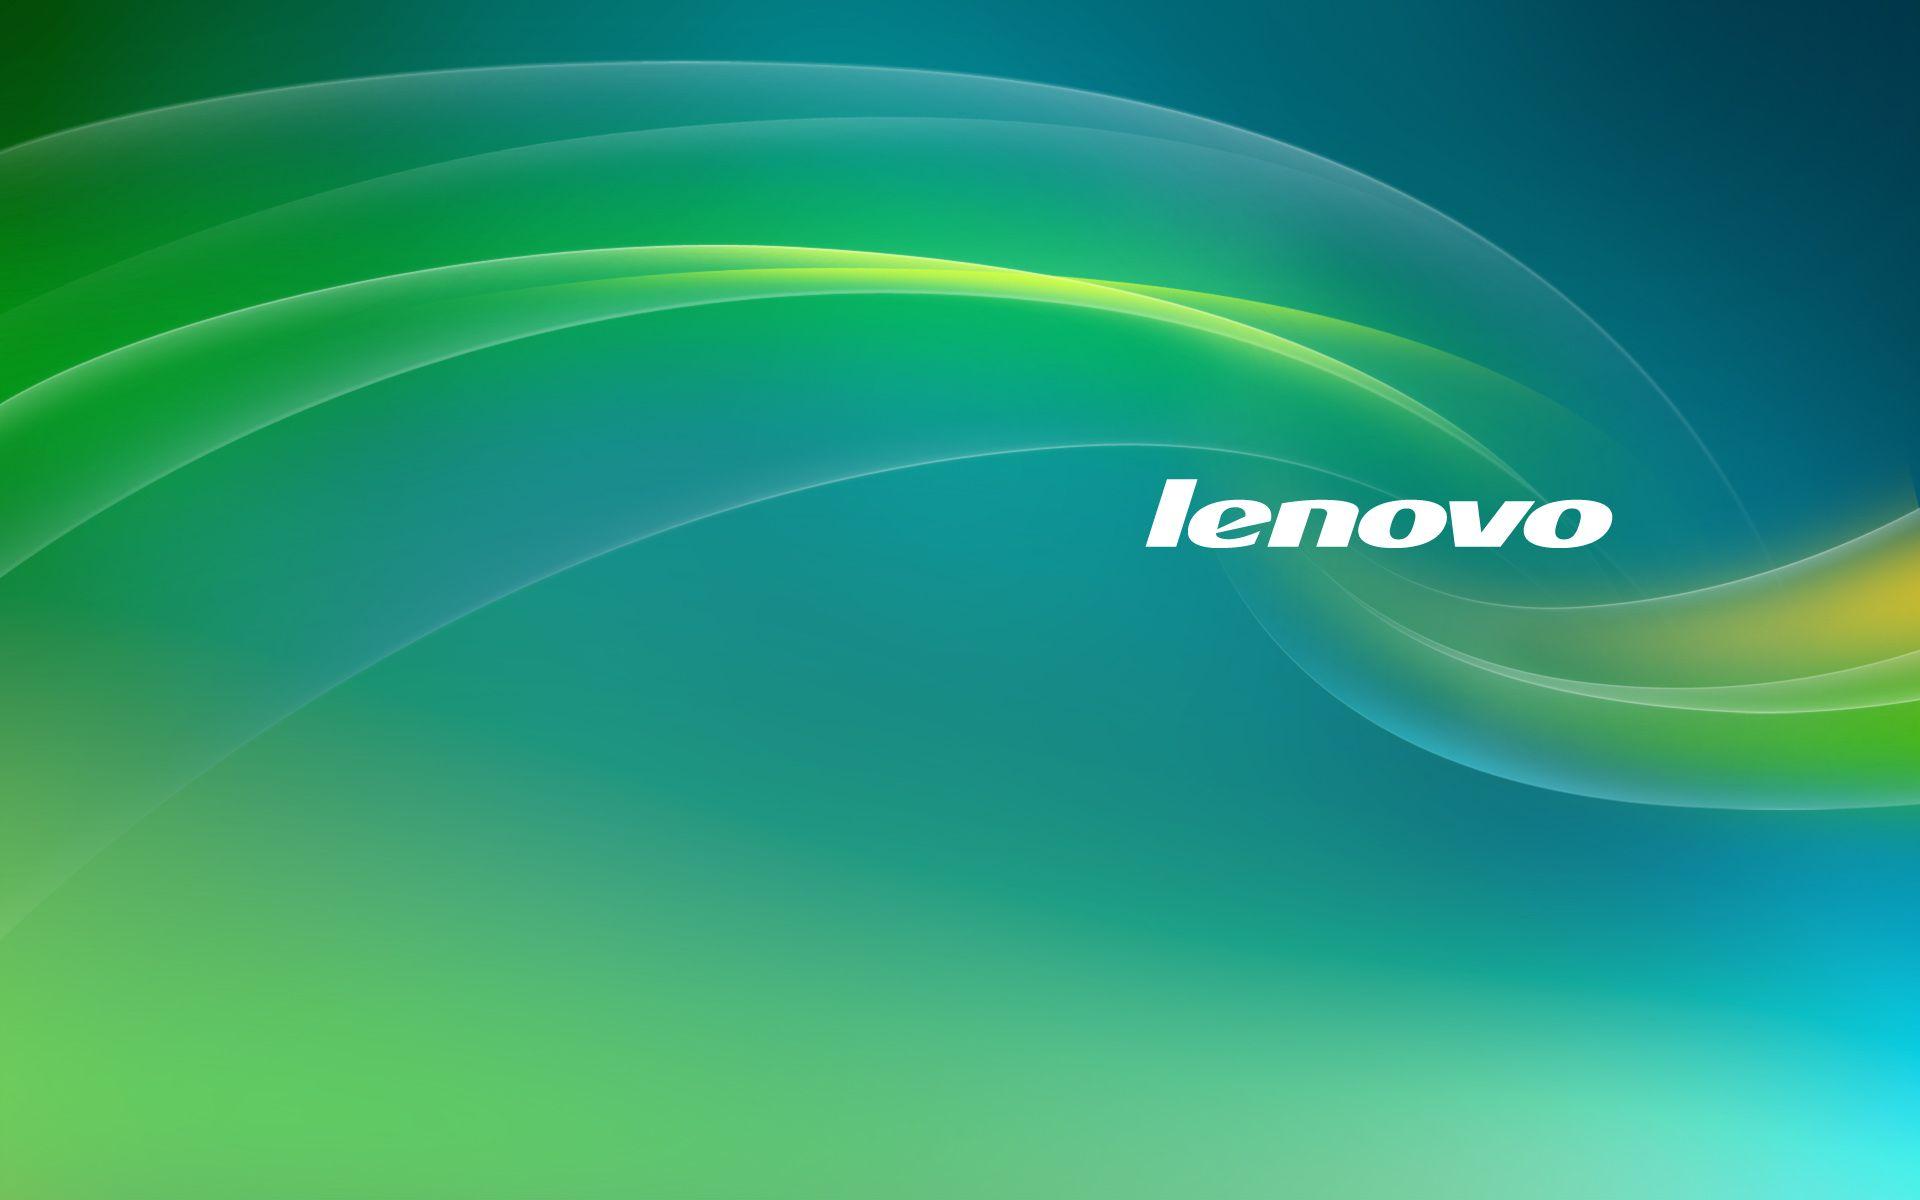 Lenovo for mobile and desktop